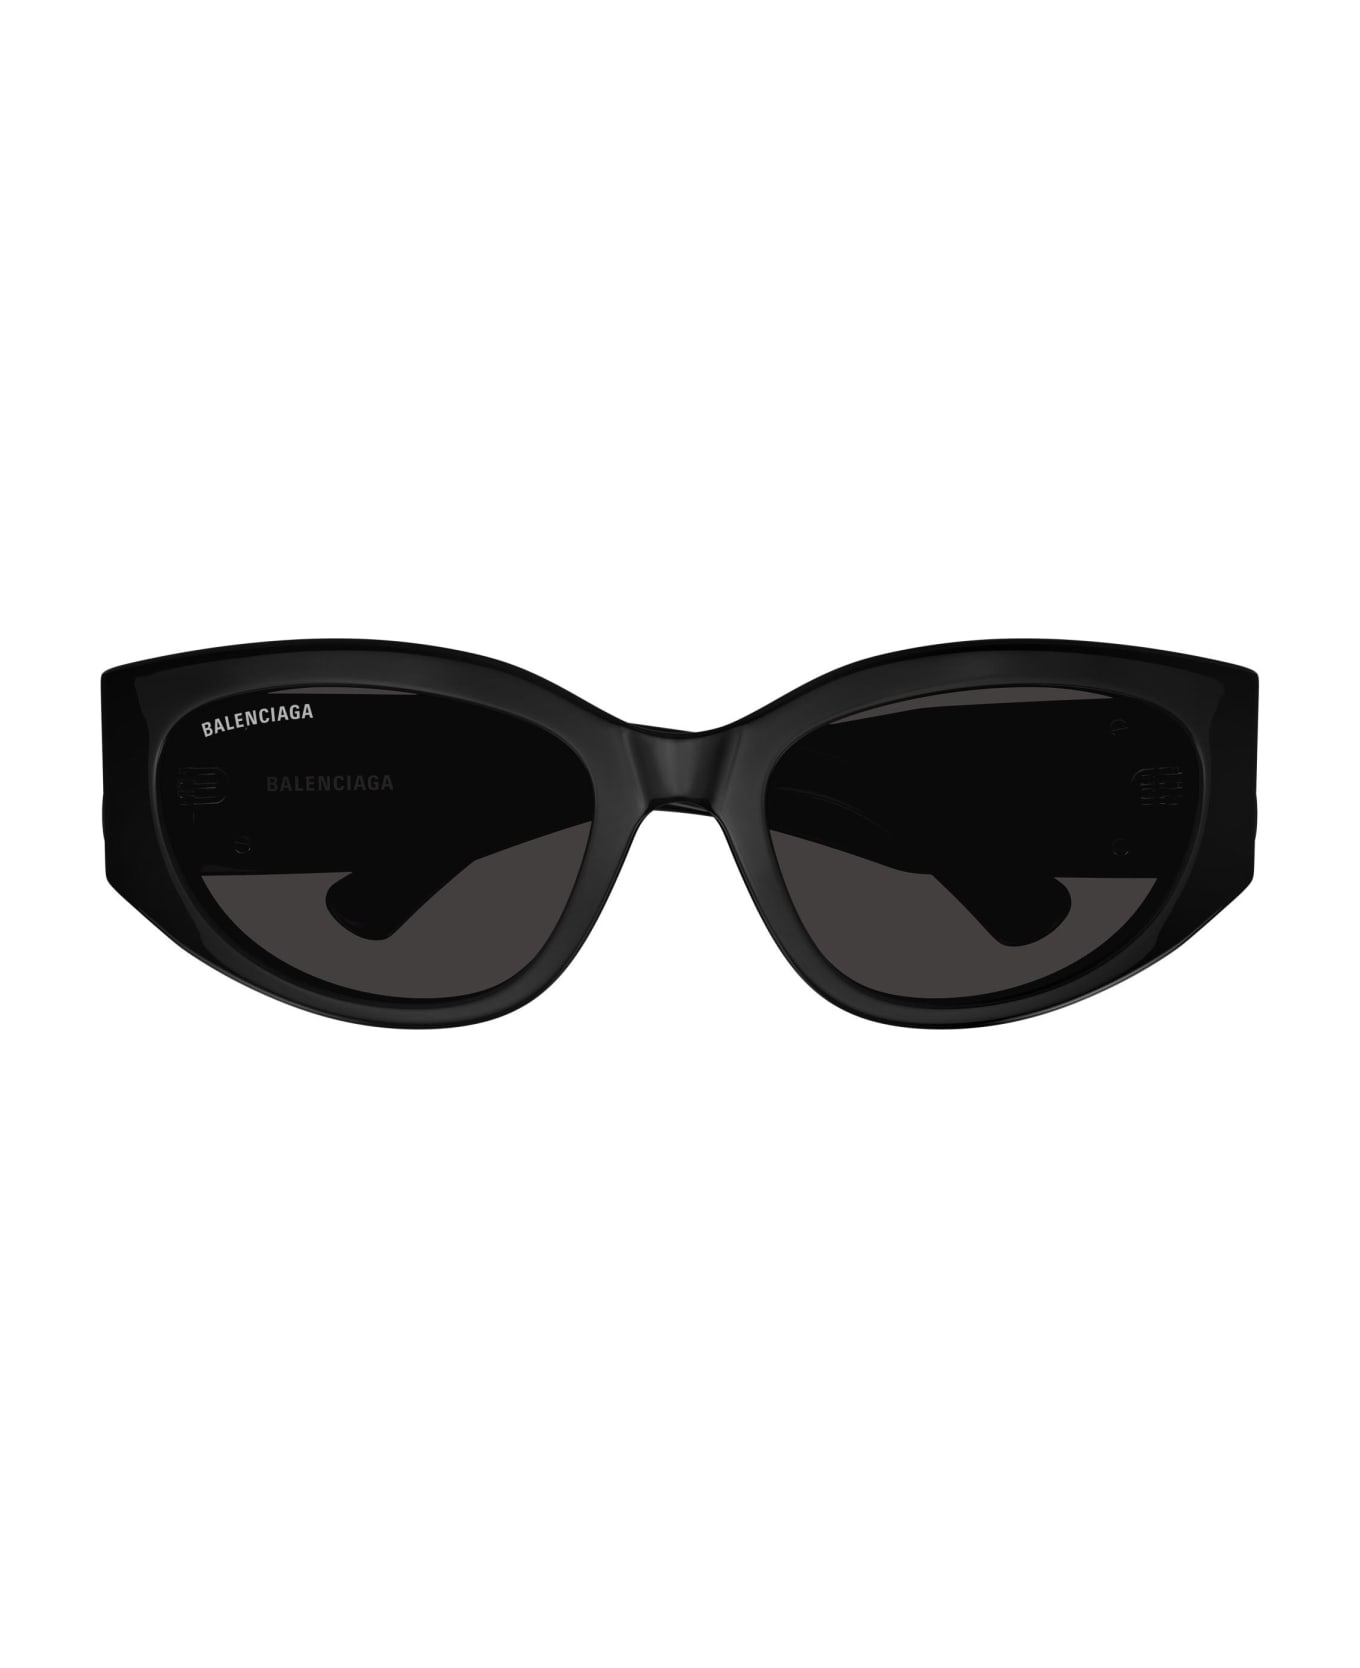 Balenciaga Eyewear Sunglasses - Nero/Grigio